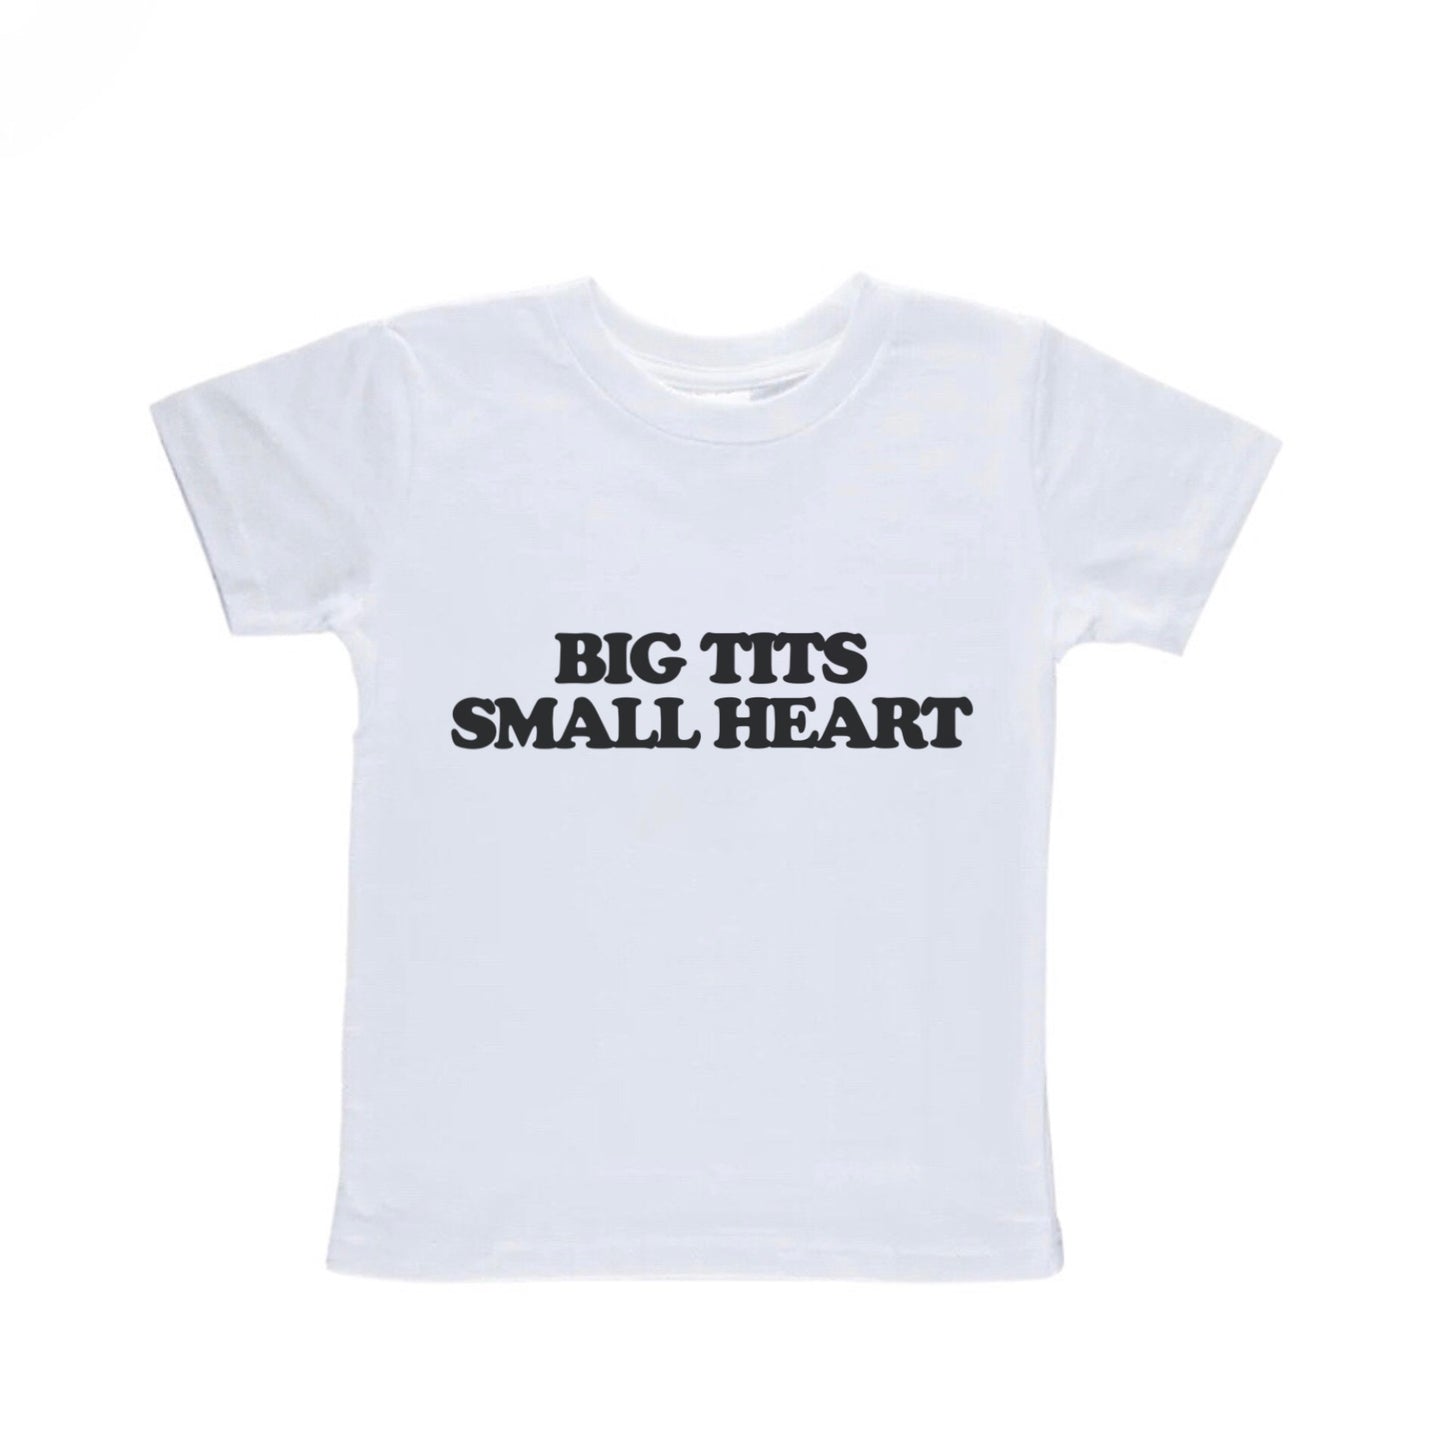 Big Tits Small Heart T-Shirt by Tee5days - Issuu